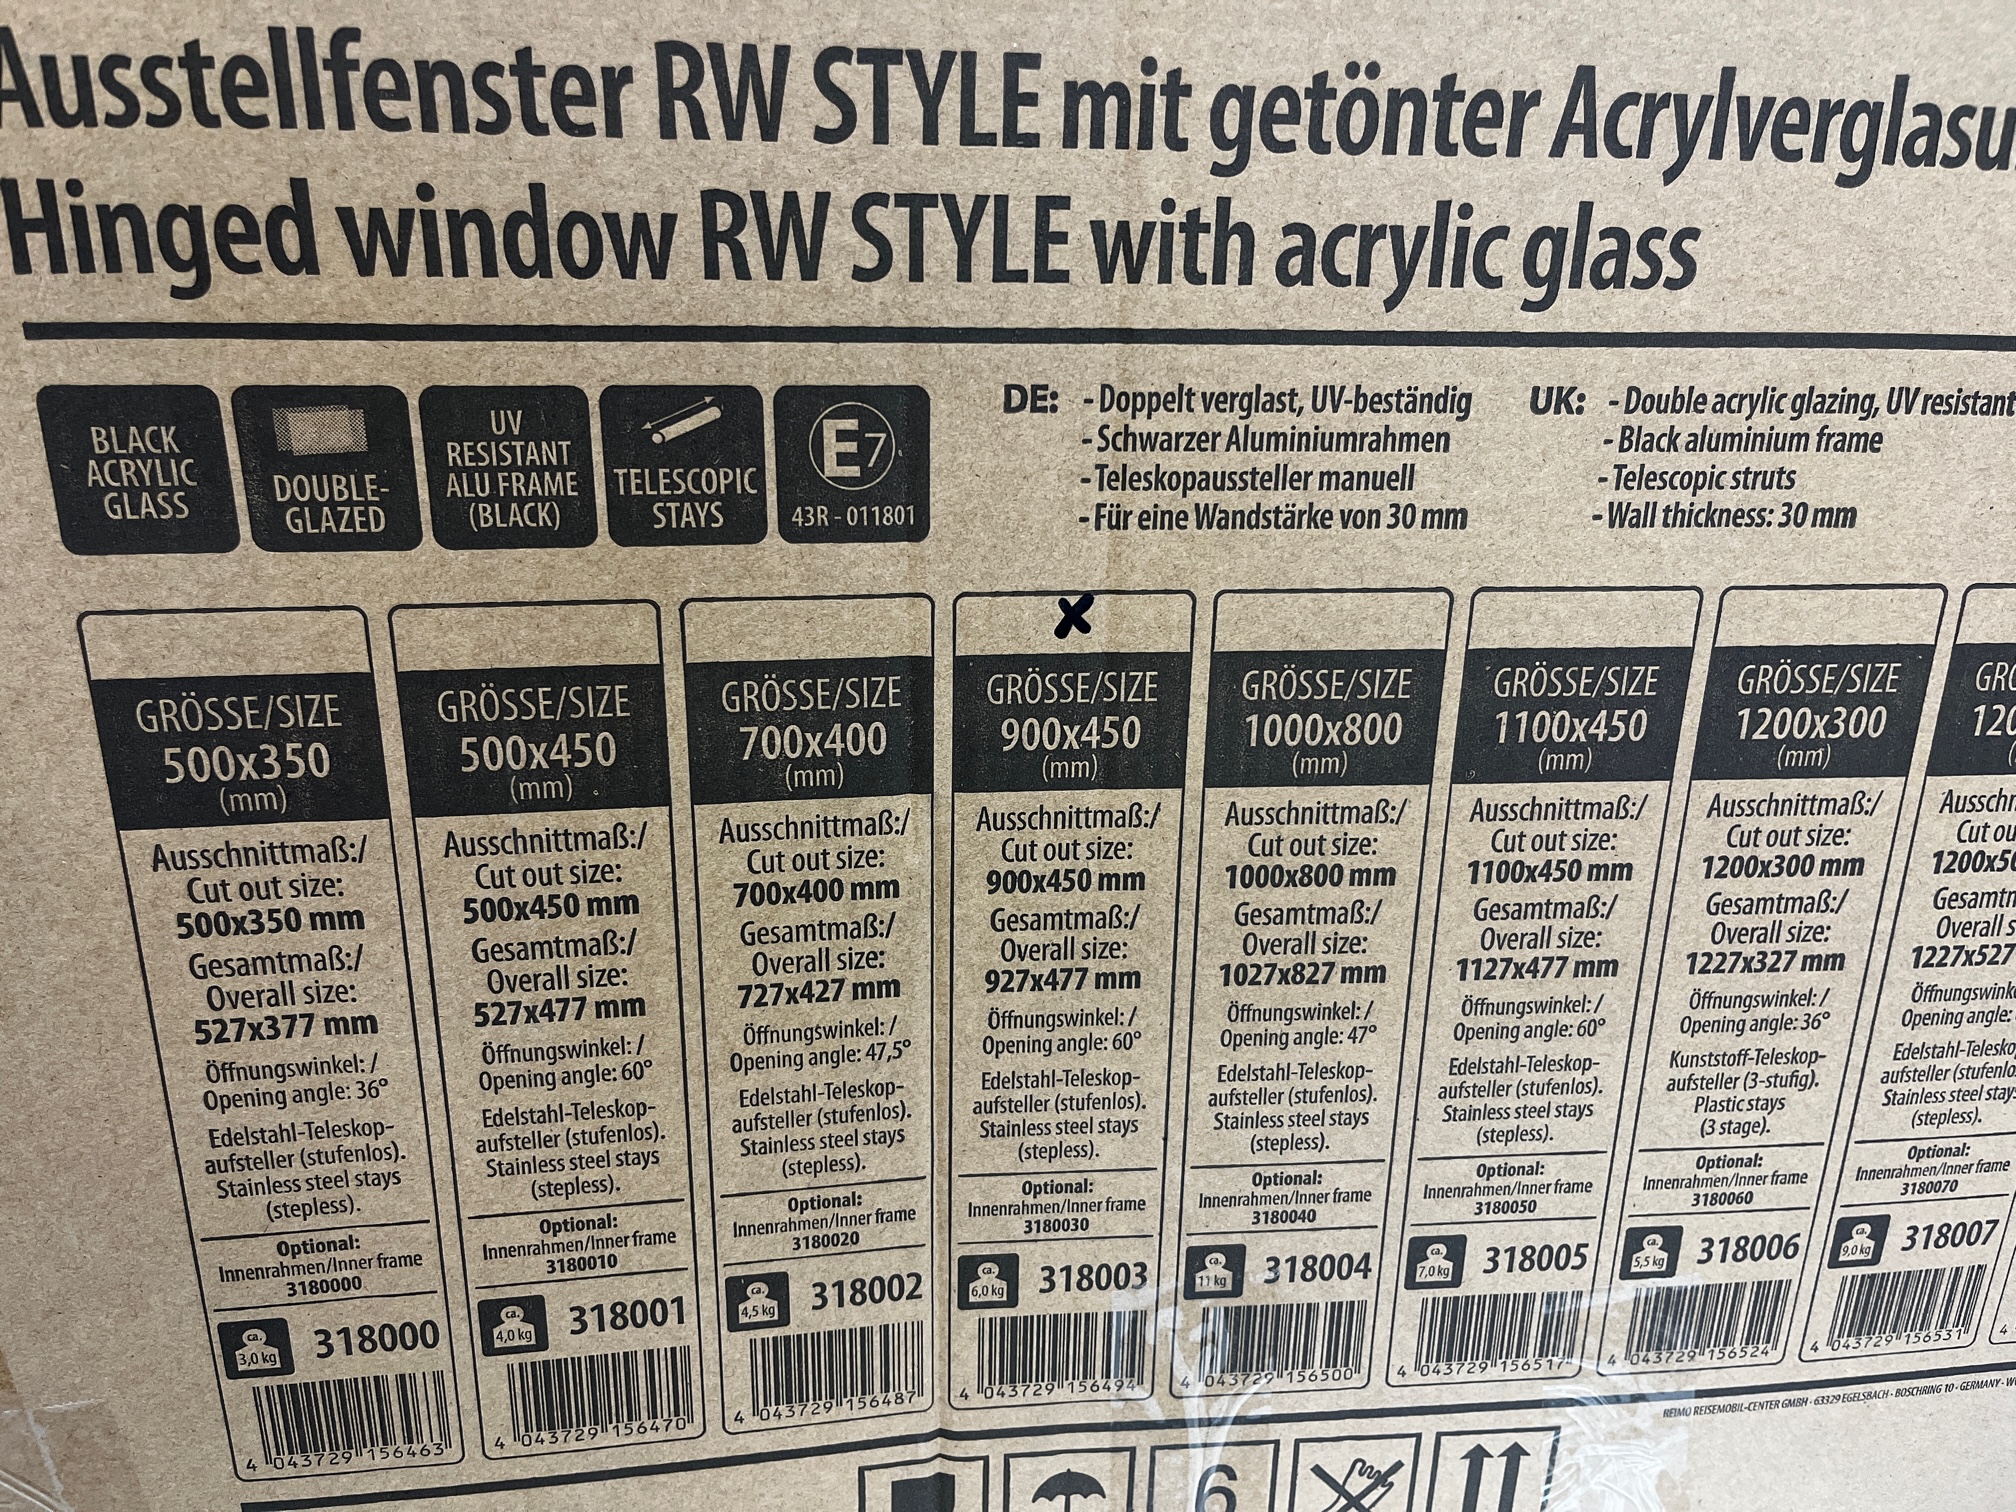 RW Style Ausstellfenster - Acrylverglast